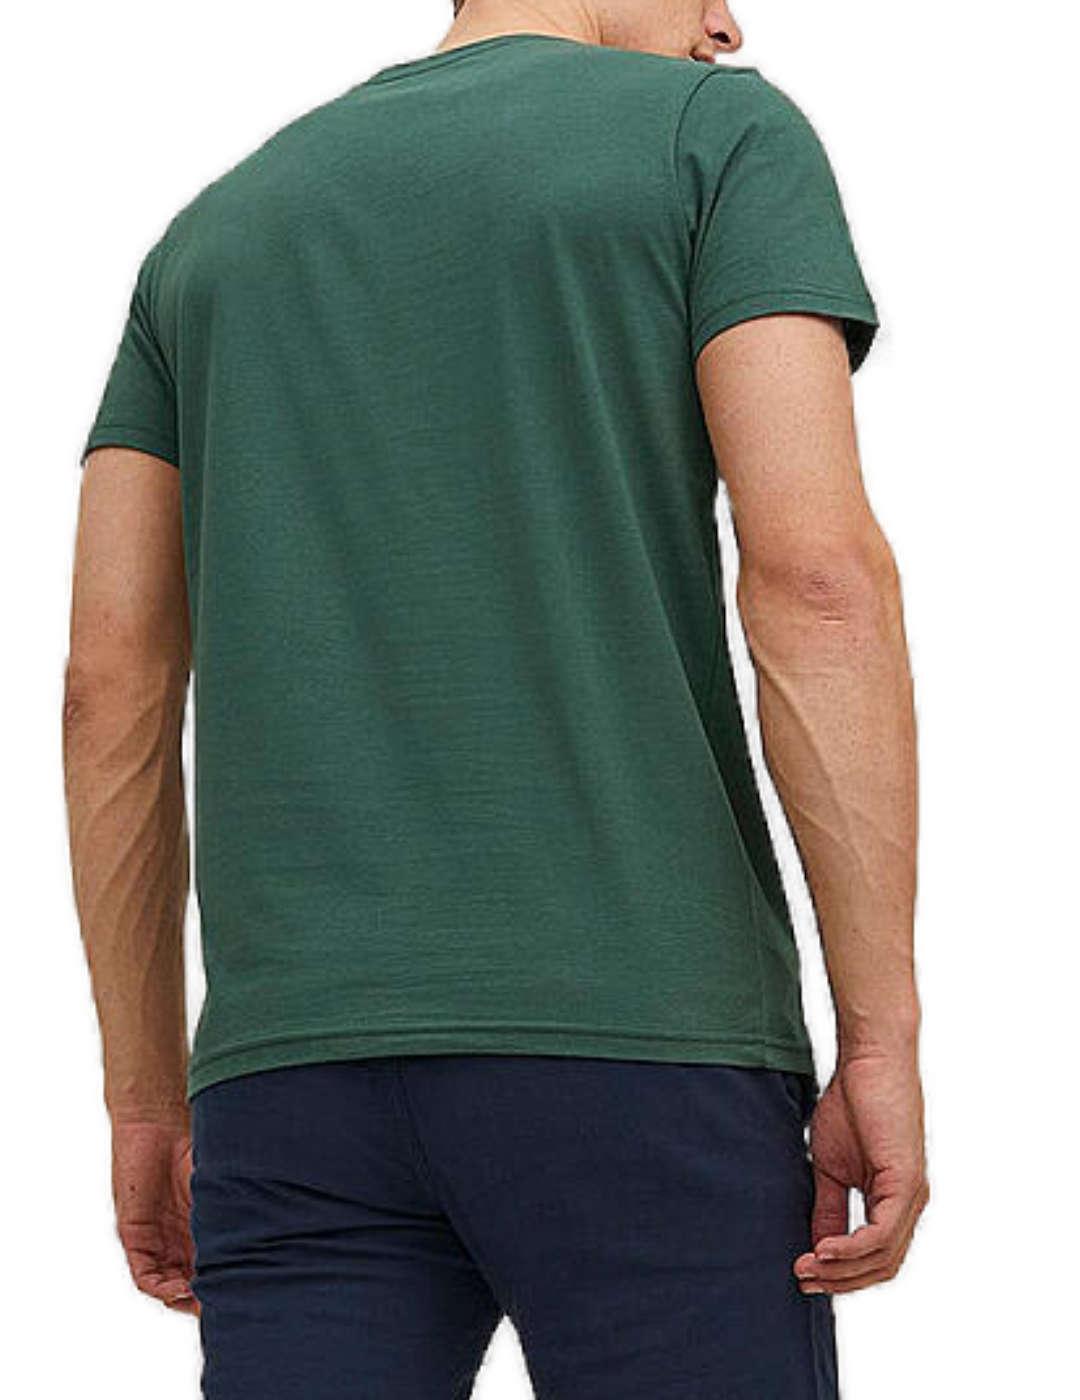 Camiseta Jack&Jones Friday verde para hombre-b